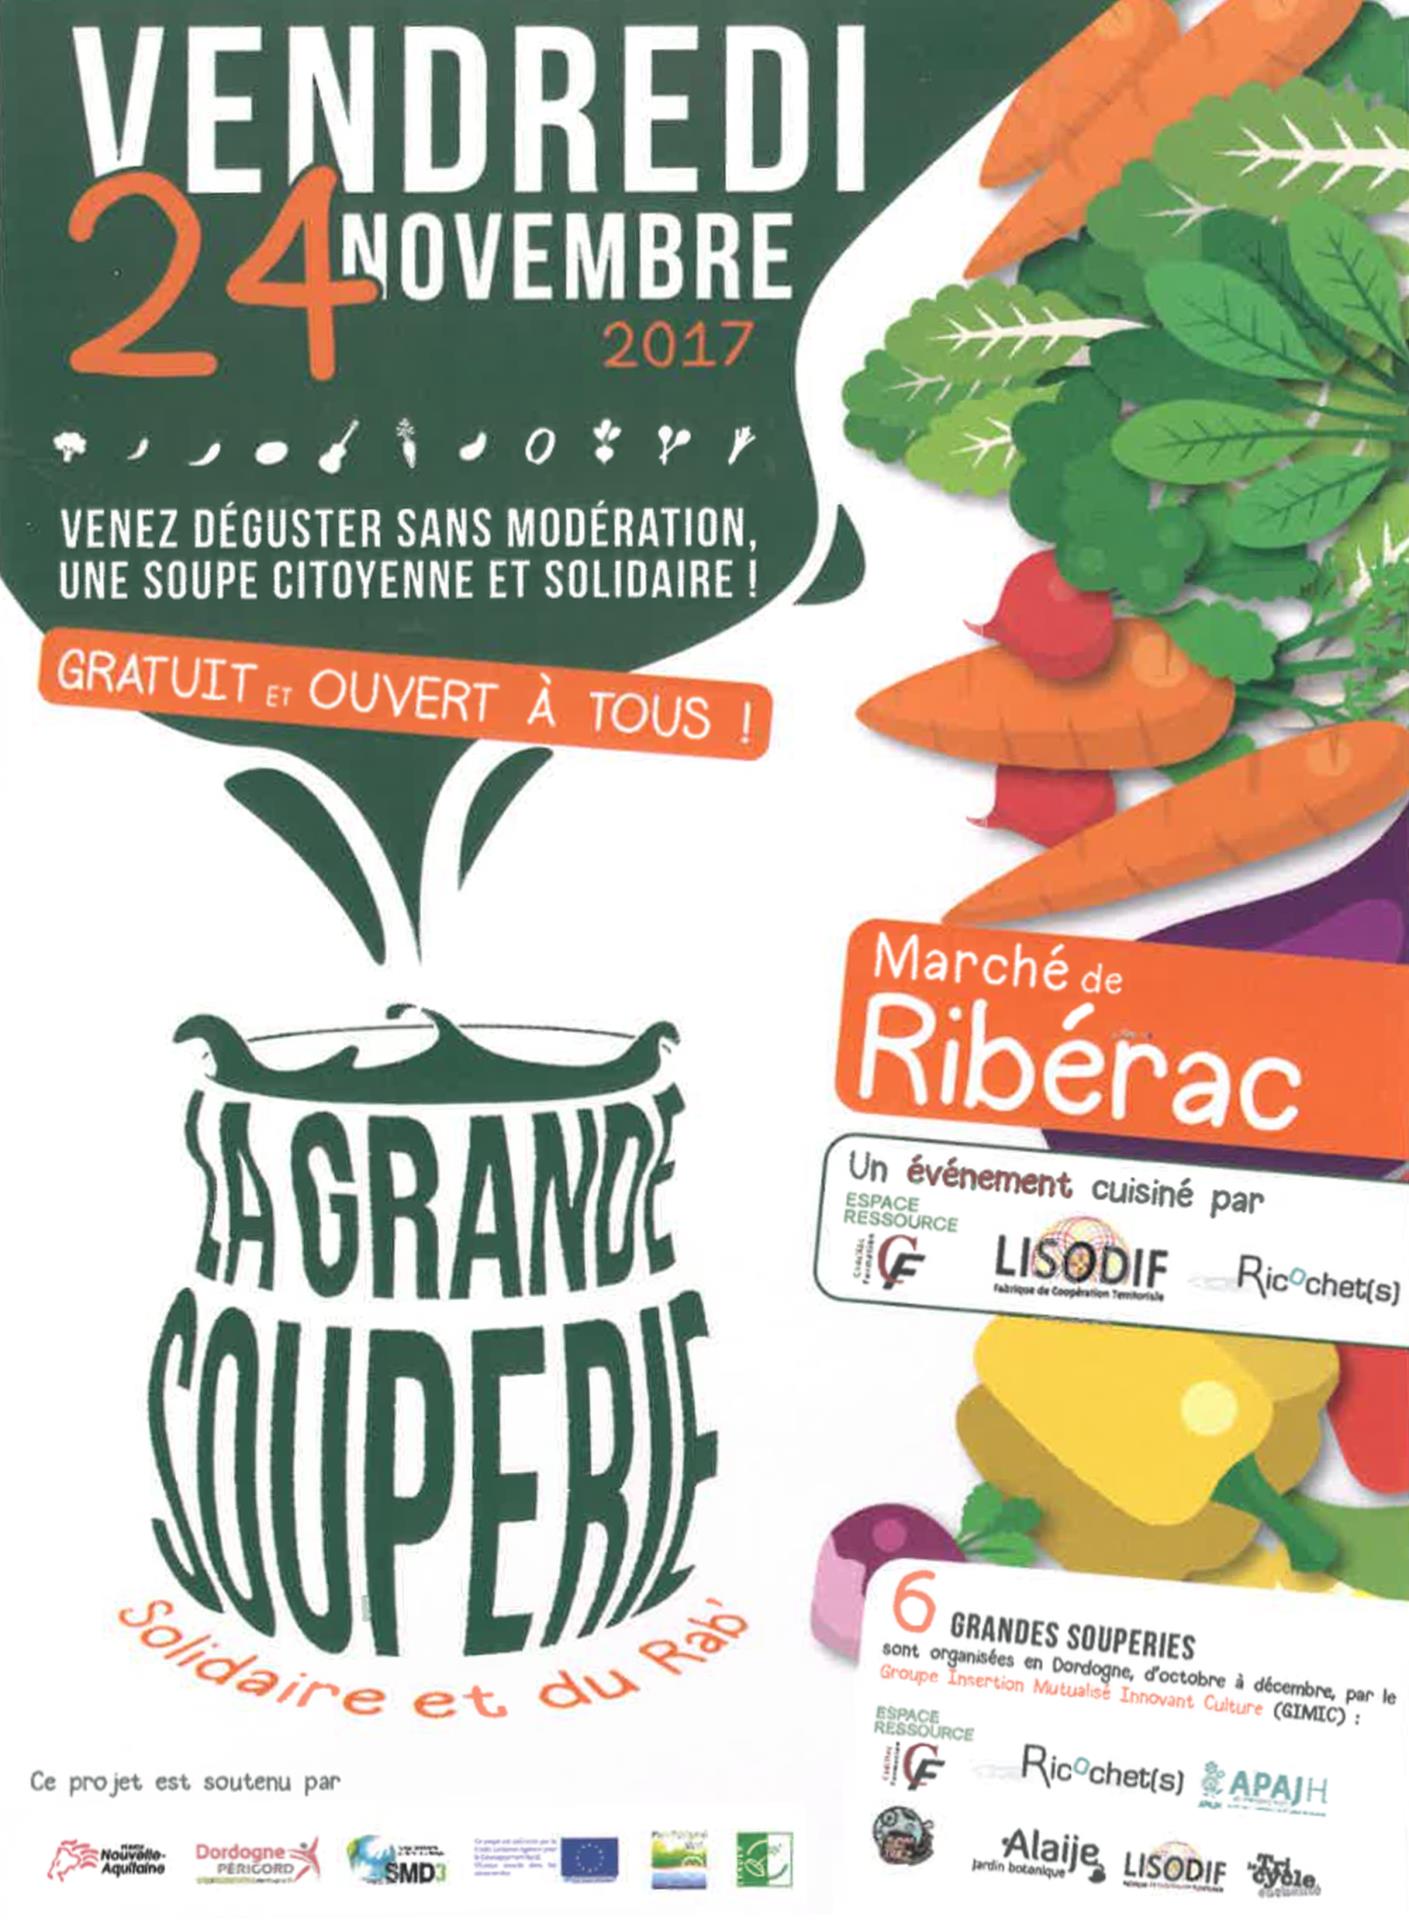 La Grande Souperie au marché de Ribérac vendredi 24 novembre 